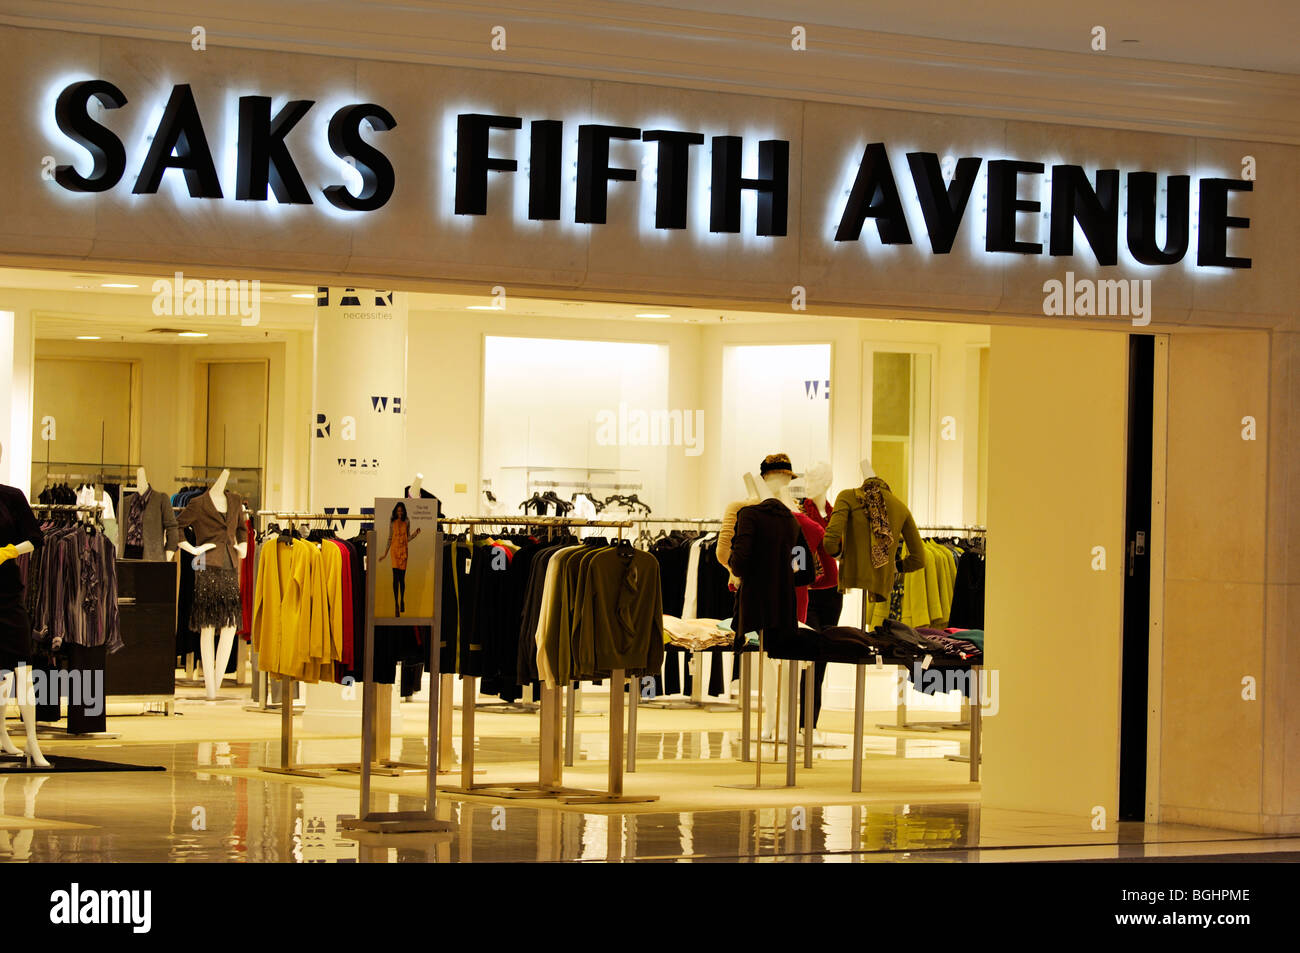 Saks Fifth Avenue store Stockfoto